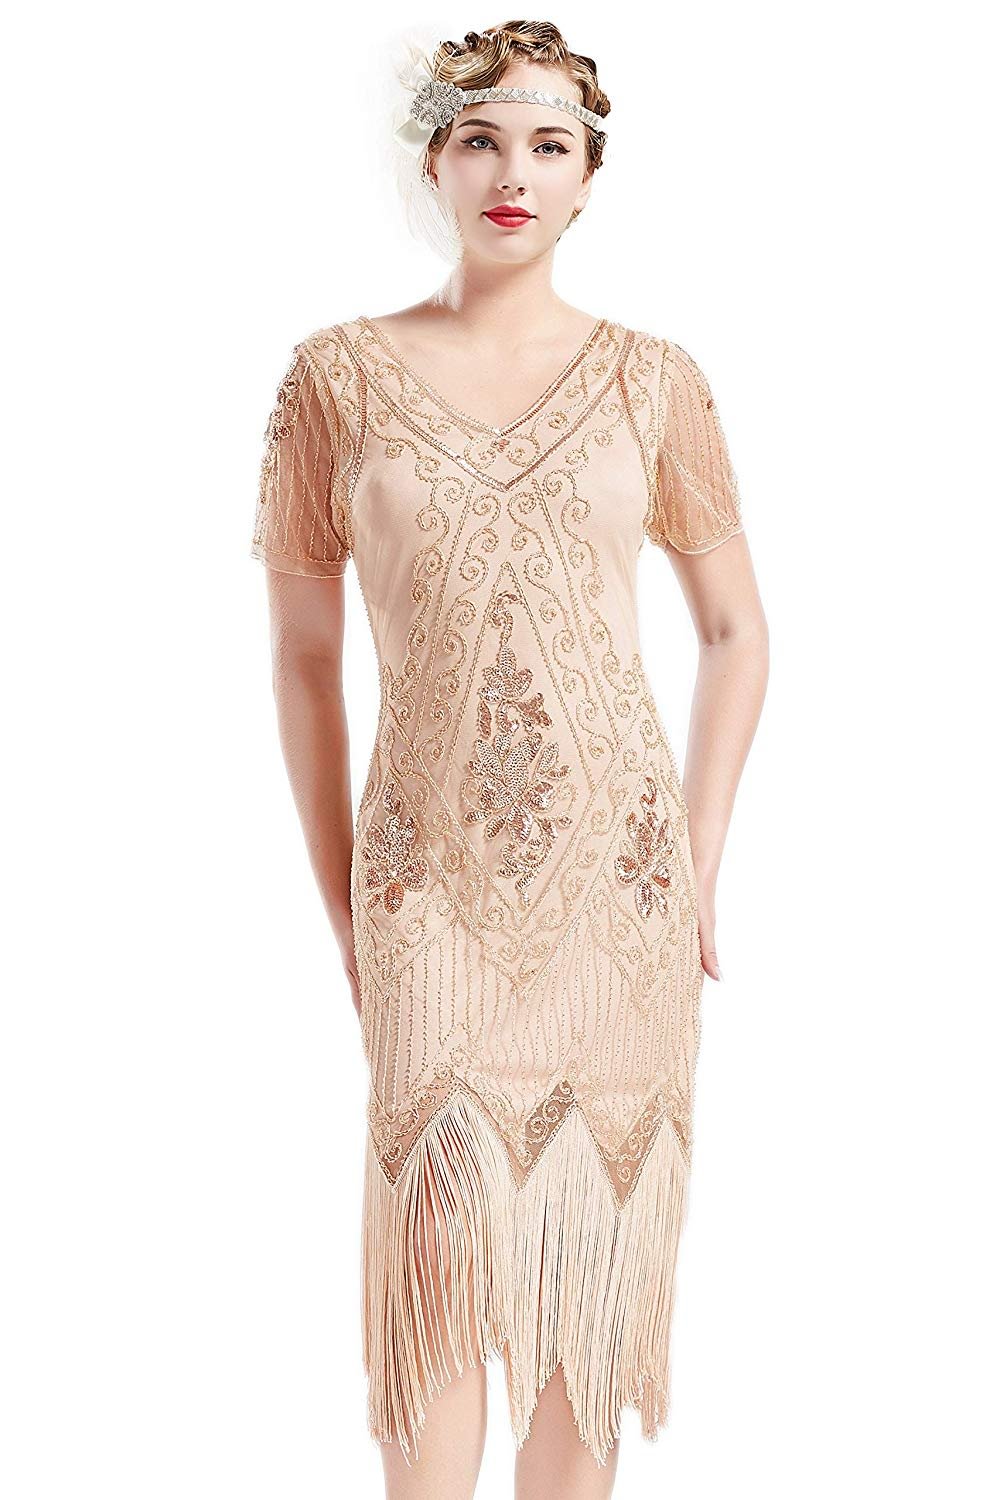 Women 1920s Art Deco Fringed Sequin Dress 20s Flapper Gatsby Costume Dress